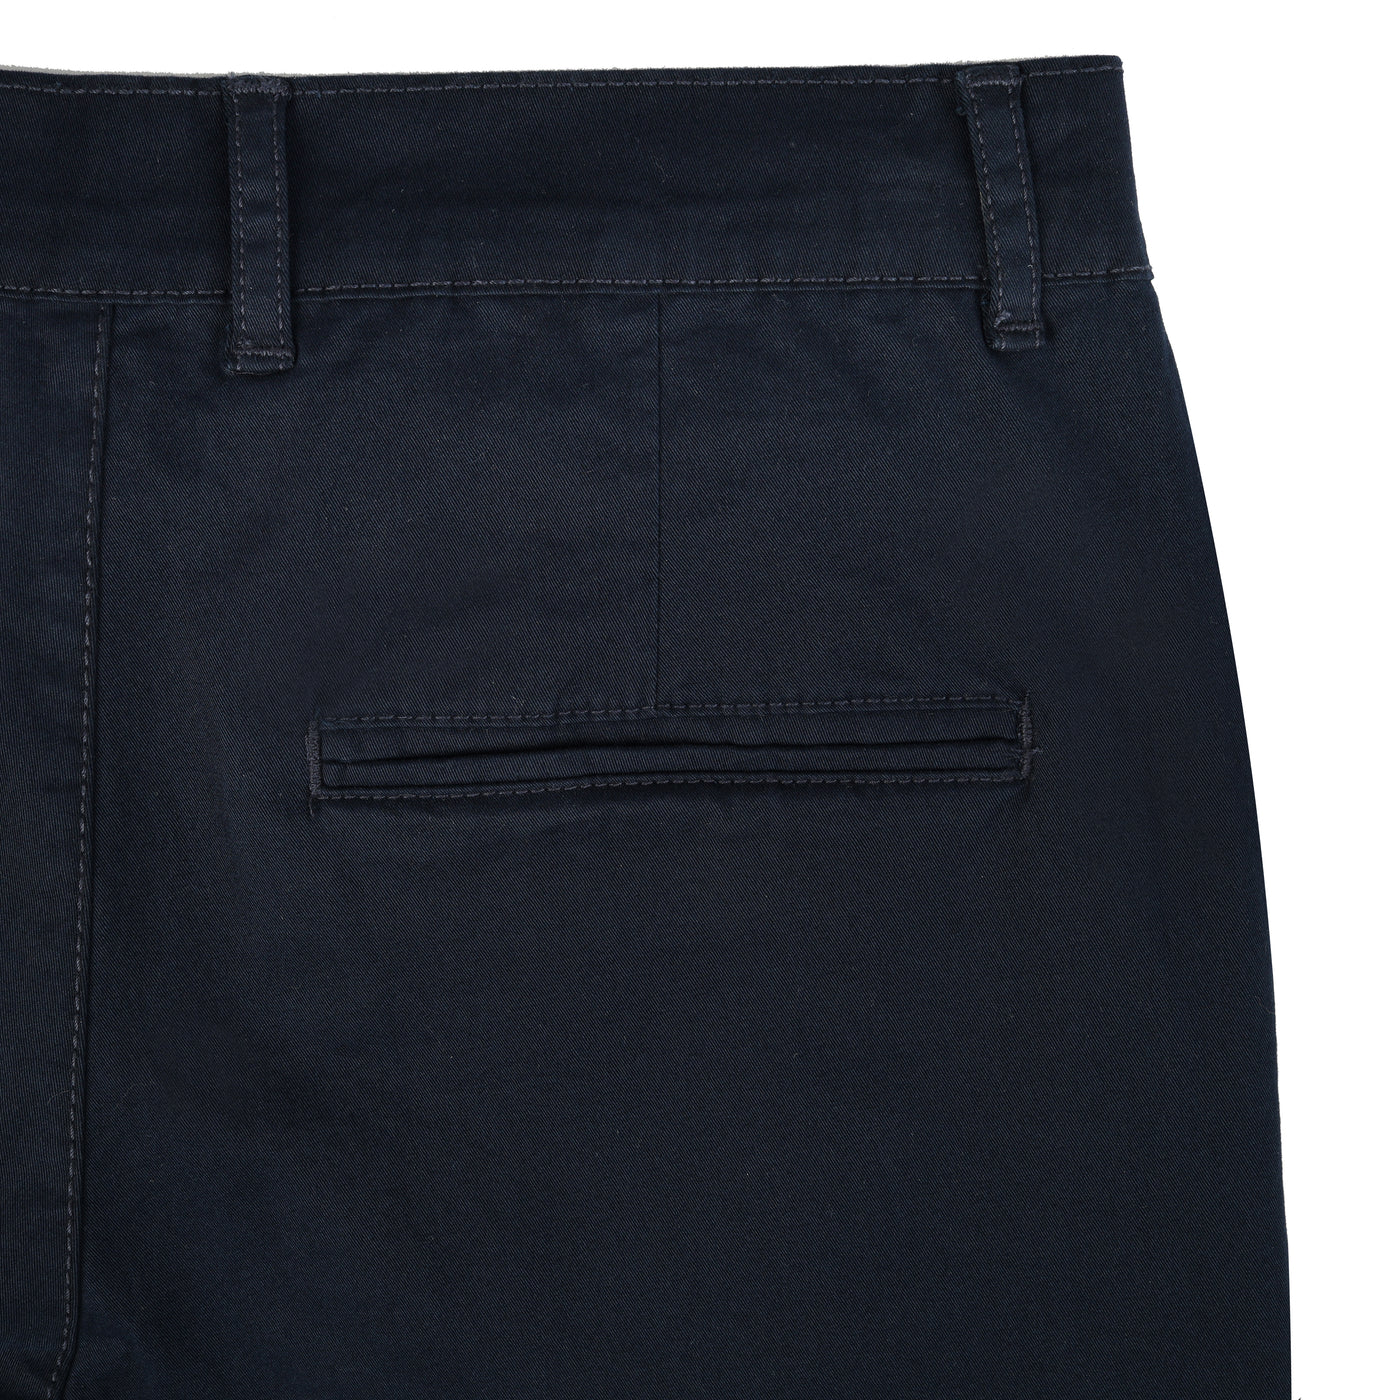 Chino Slim Navy Cotton Elastic Pant